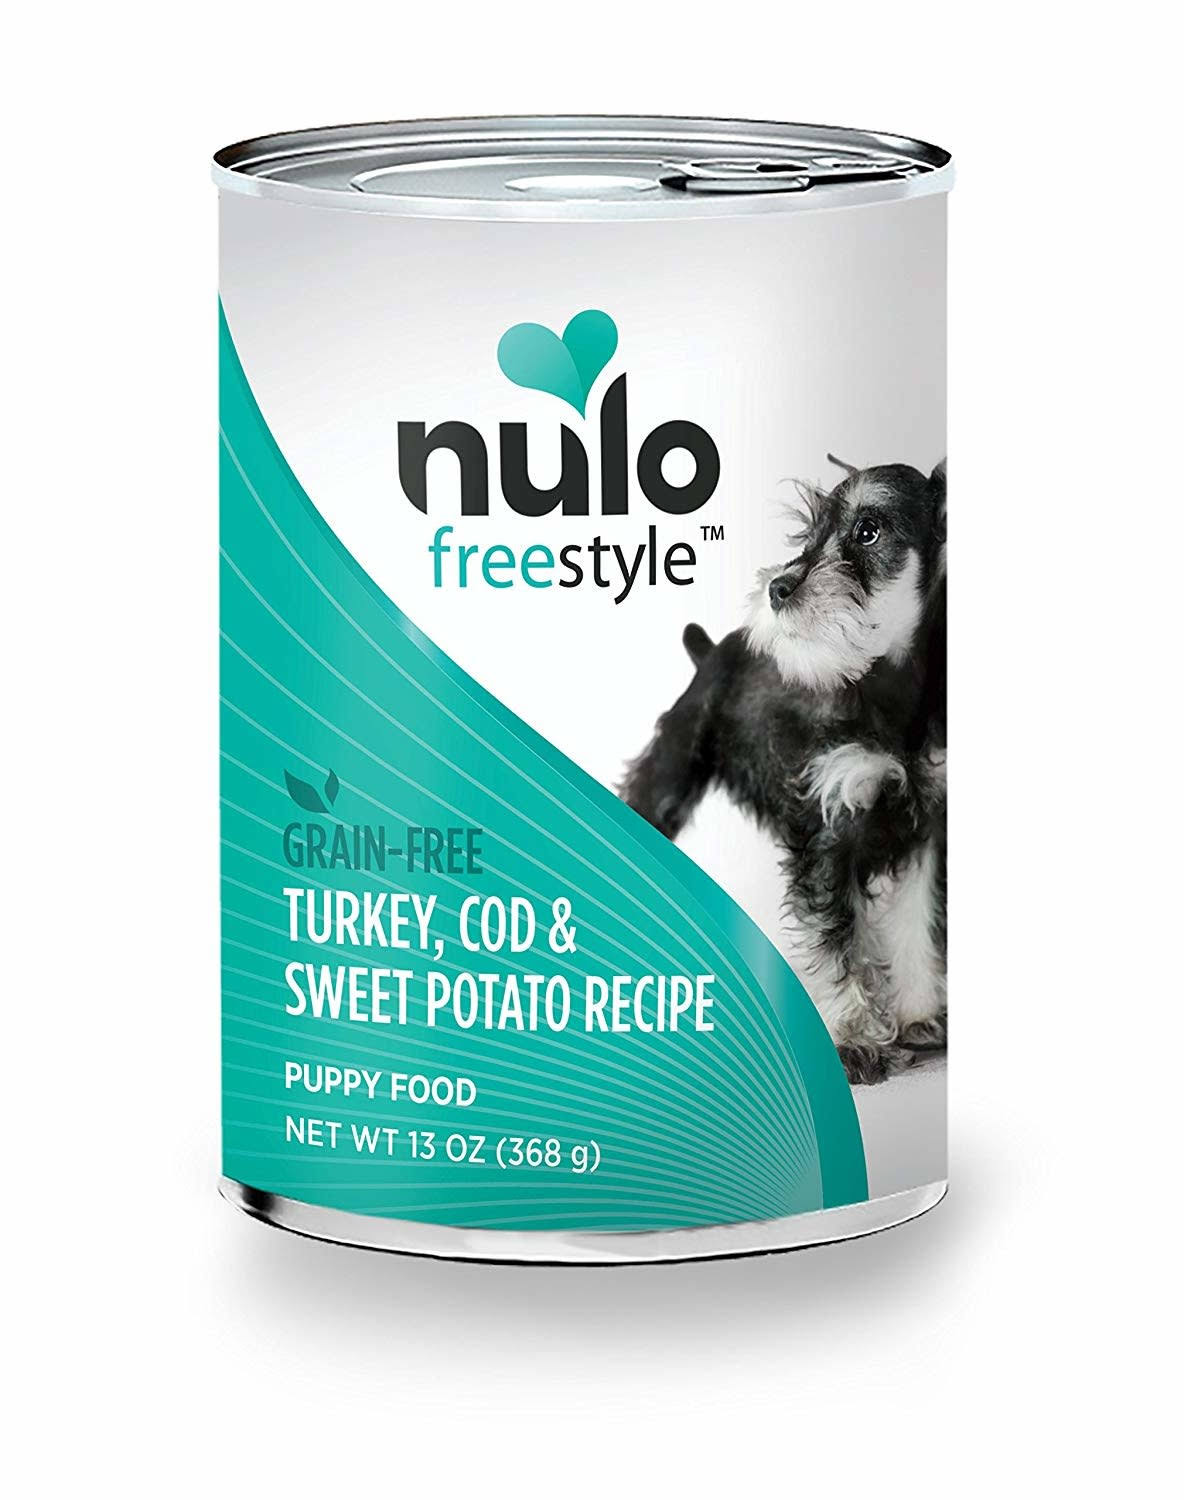 Nulo Freestyle Grain-Free Turkey Cod & Sweet Potato Canned Puppy Food, 13 oz.